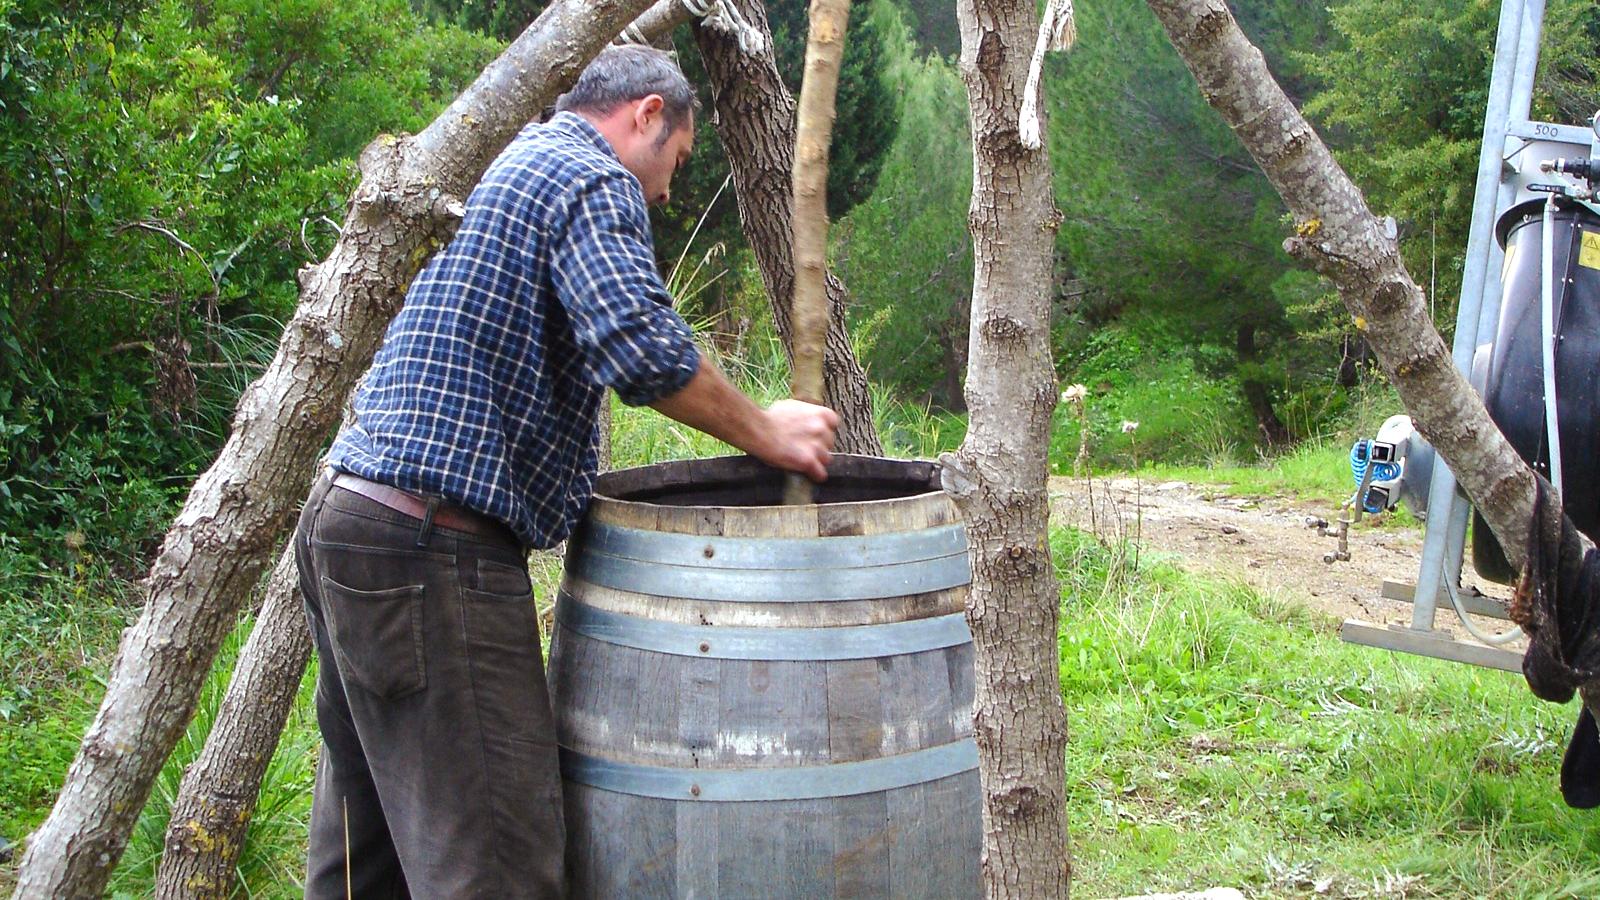 Winery, Abbazia Santa Anastasia